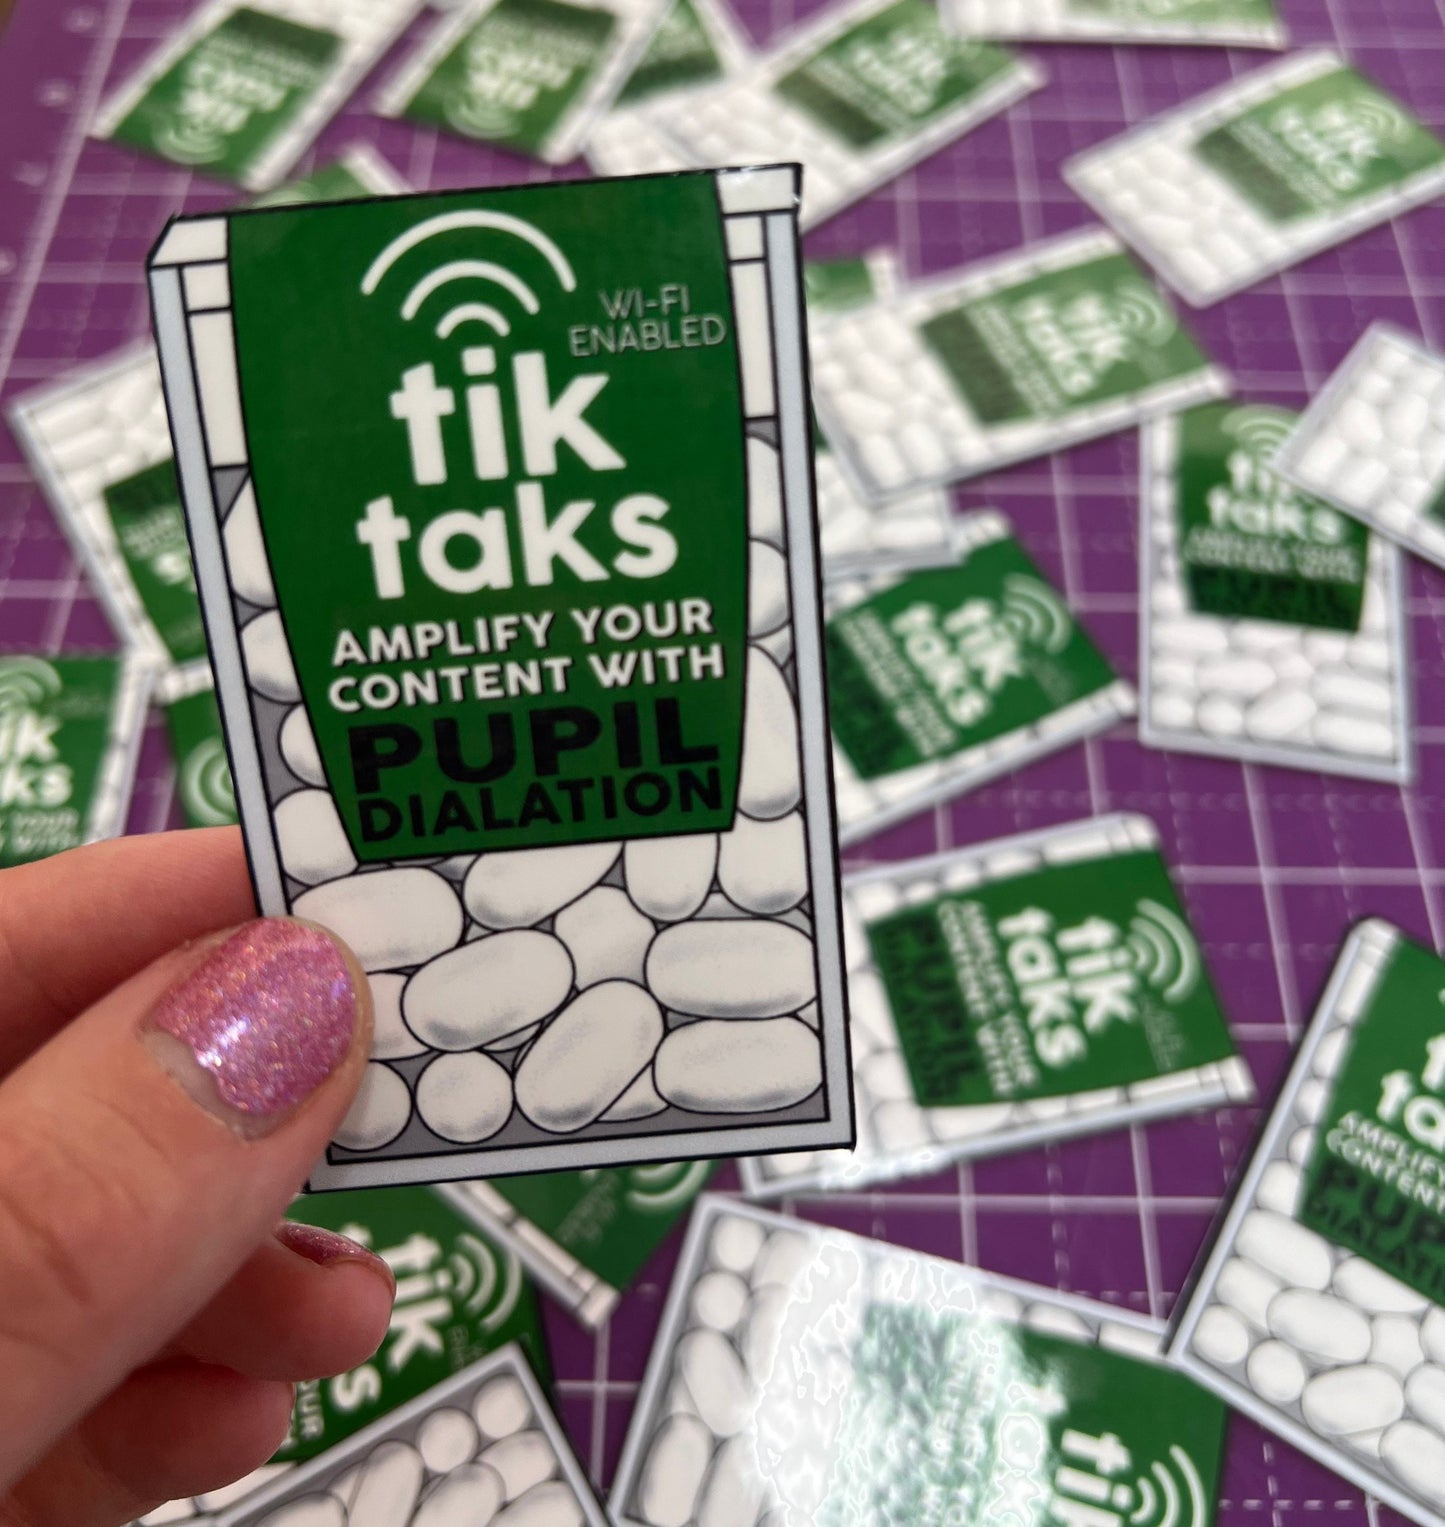 TikTok “Tik Taks” Wi-Fi Enabled Pupil “Dialation” to Amplify your Content Sticker